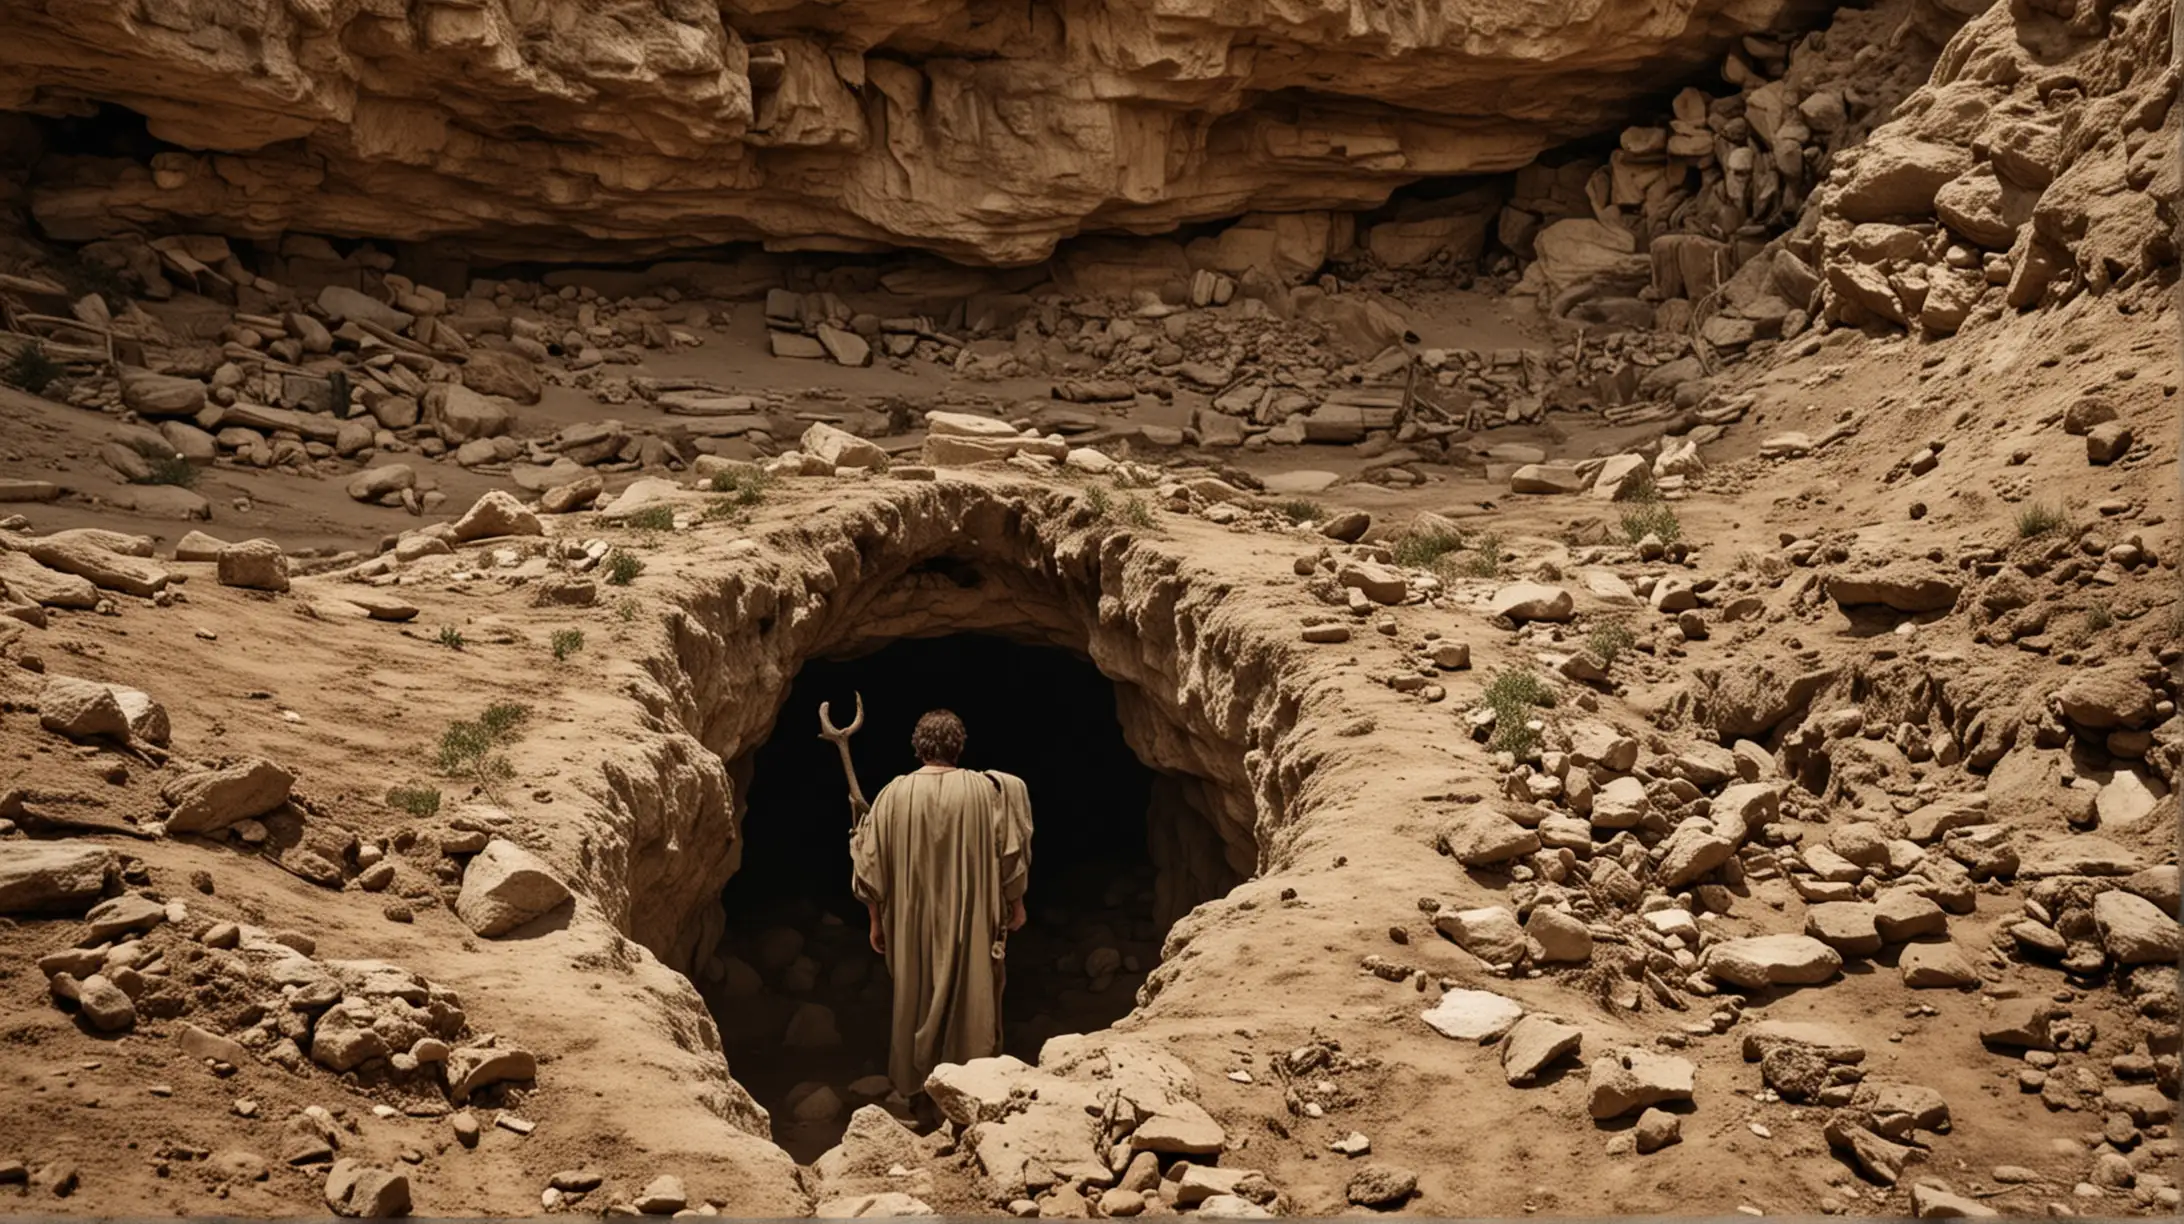 Man Rising from Dug Grave in Biblical Elijah Era Cave Setting